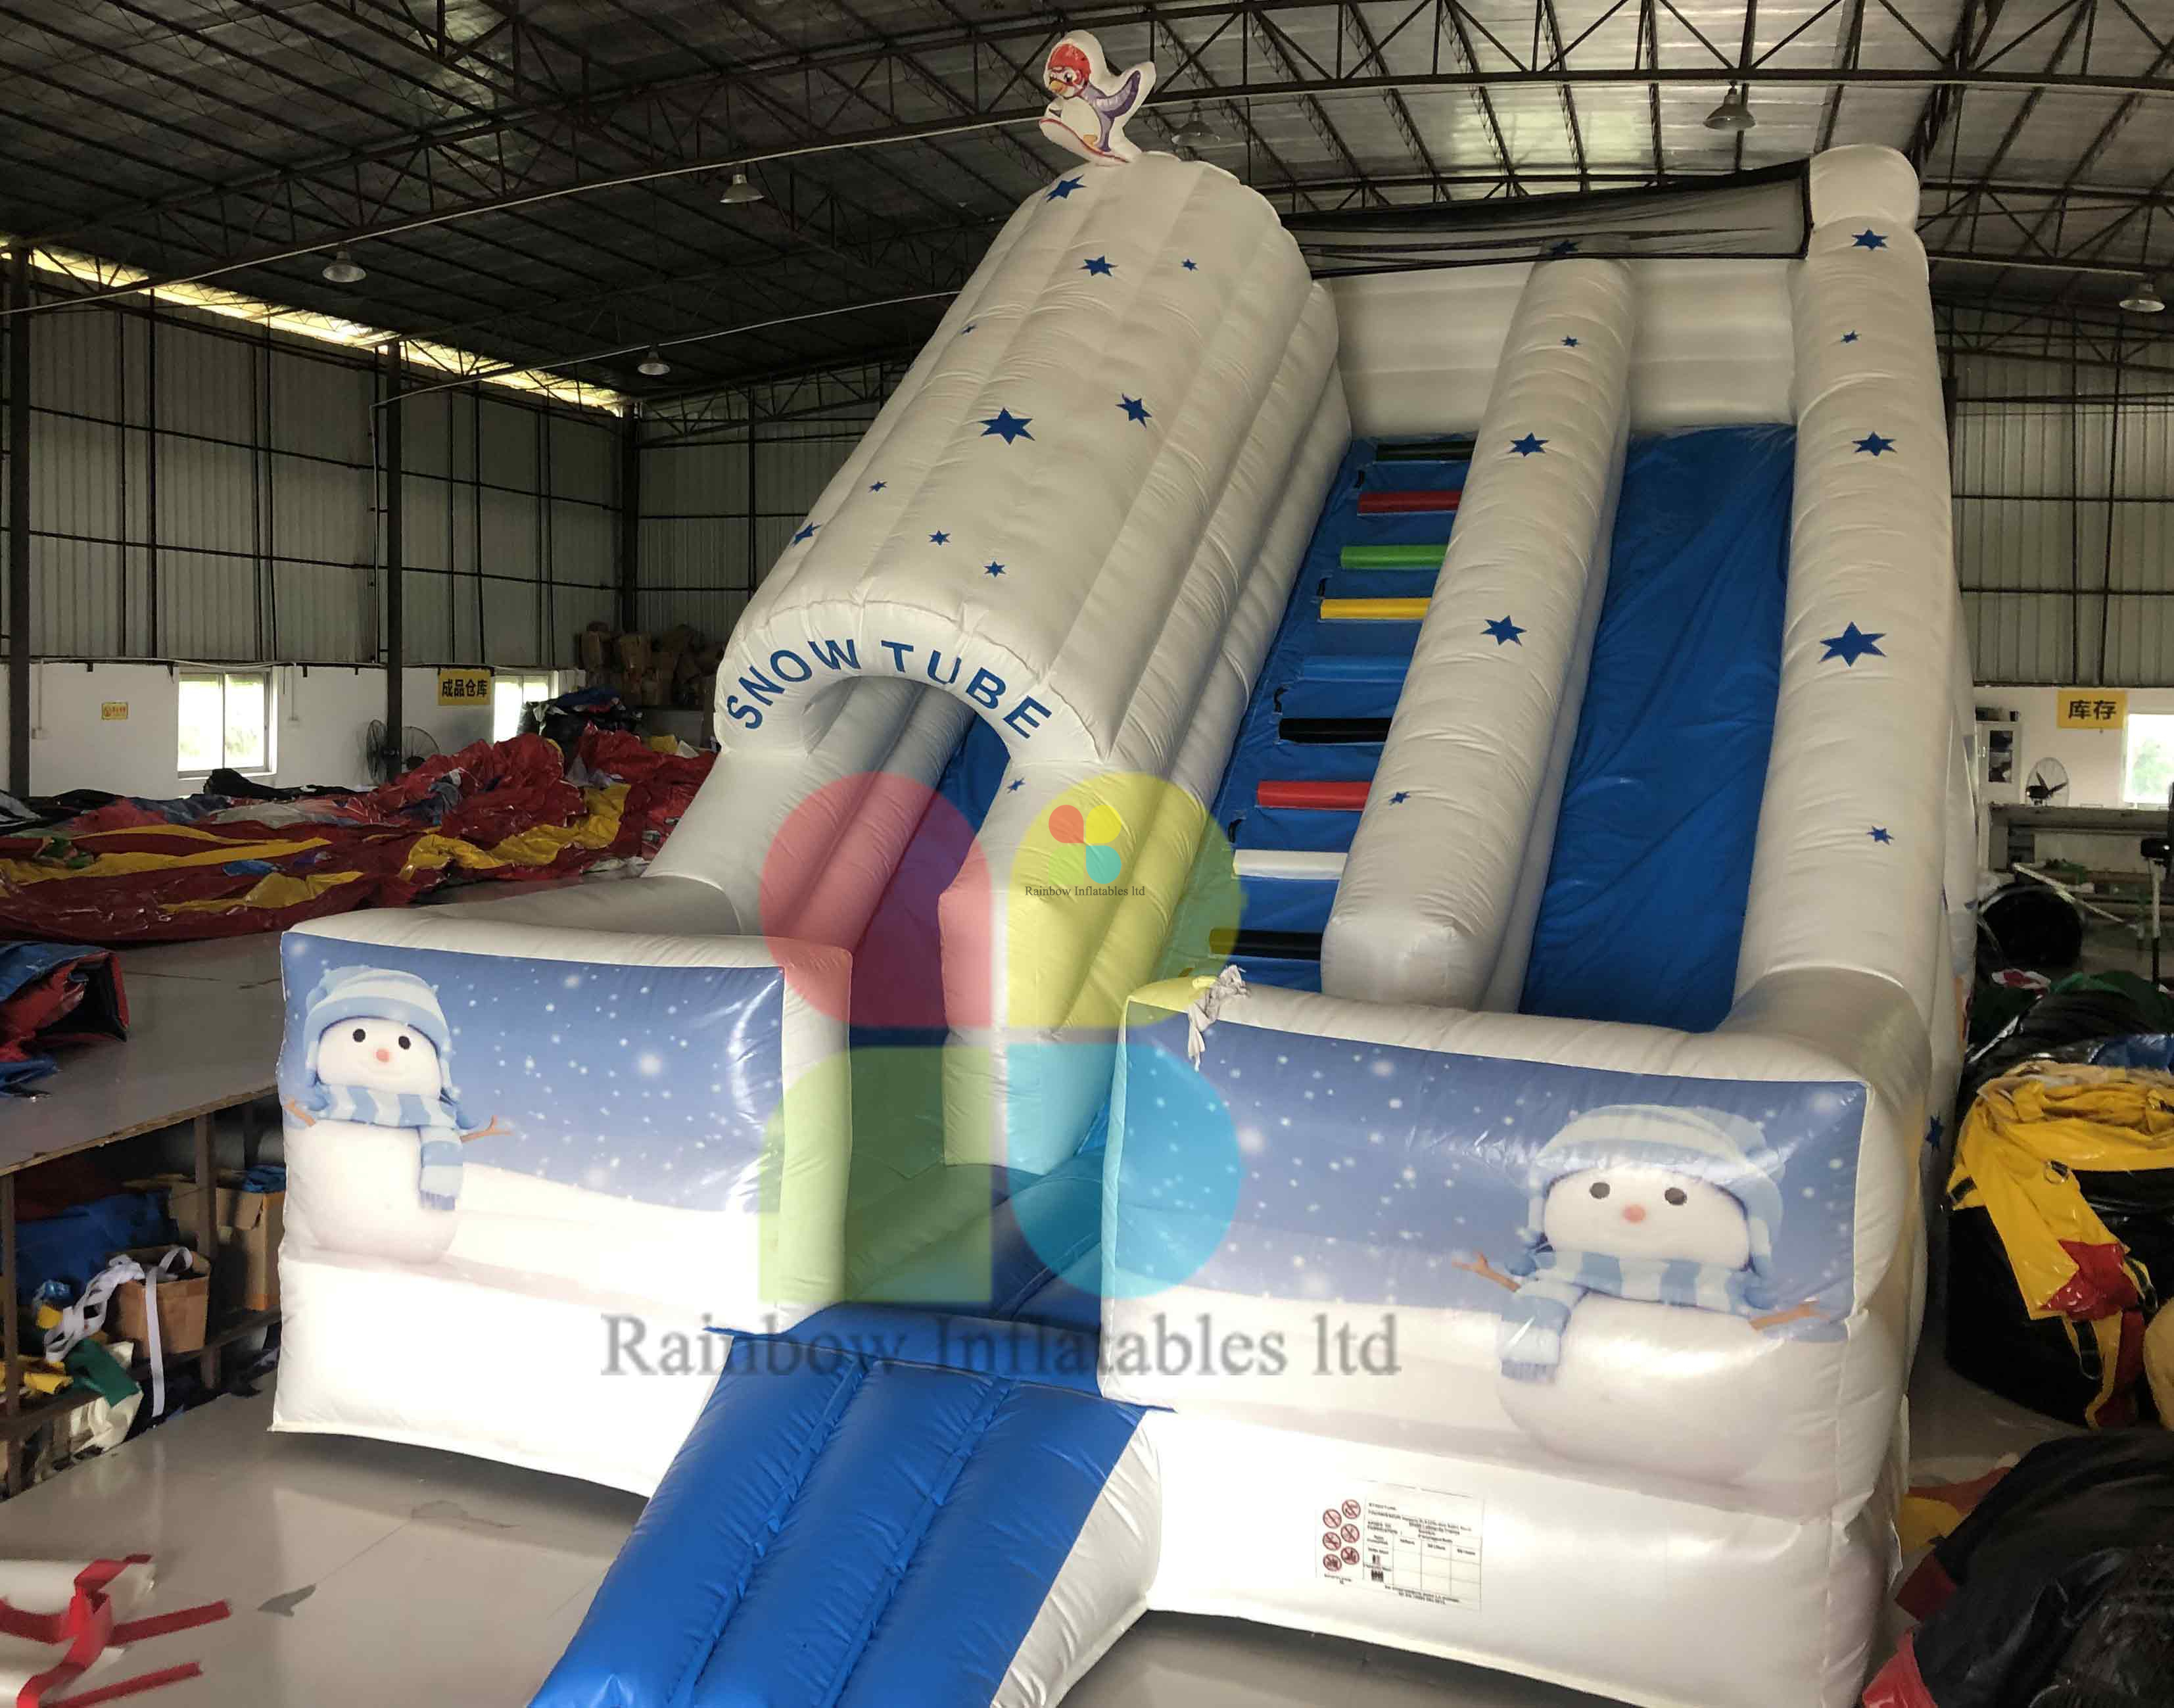 Inflatable Wet Slides for Sale